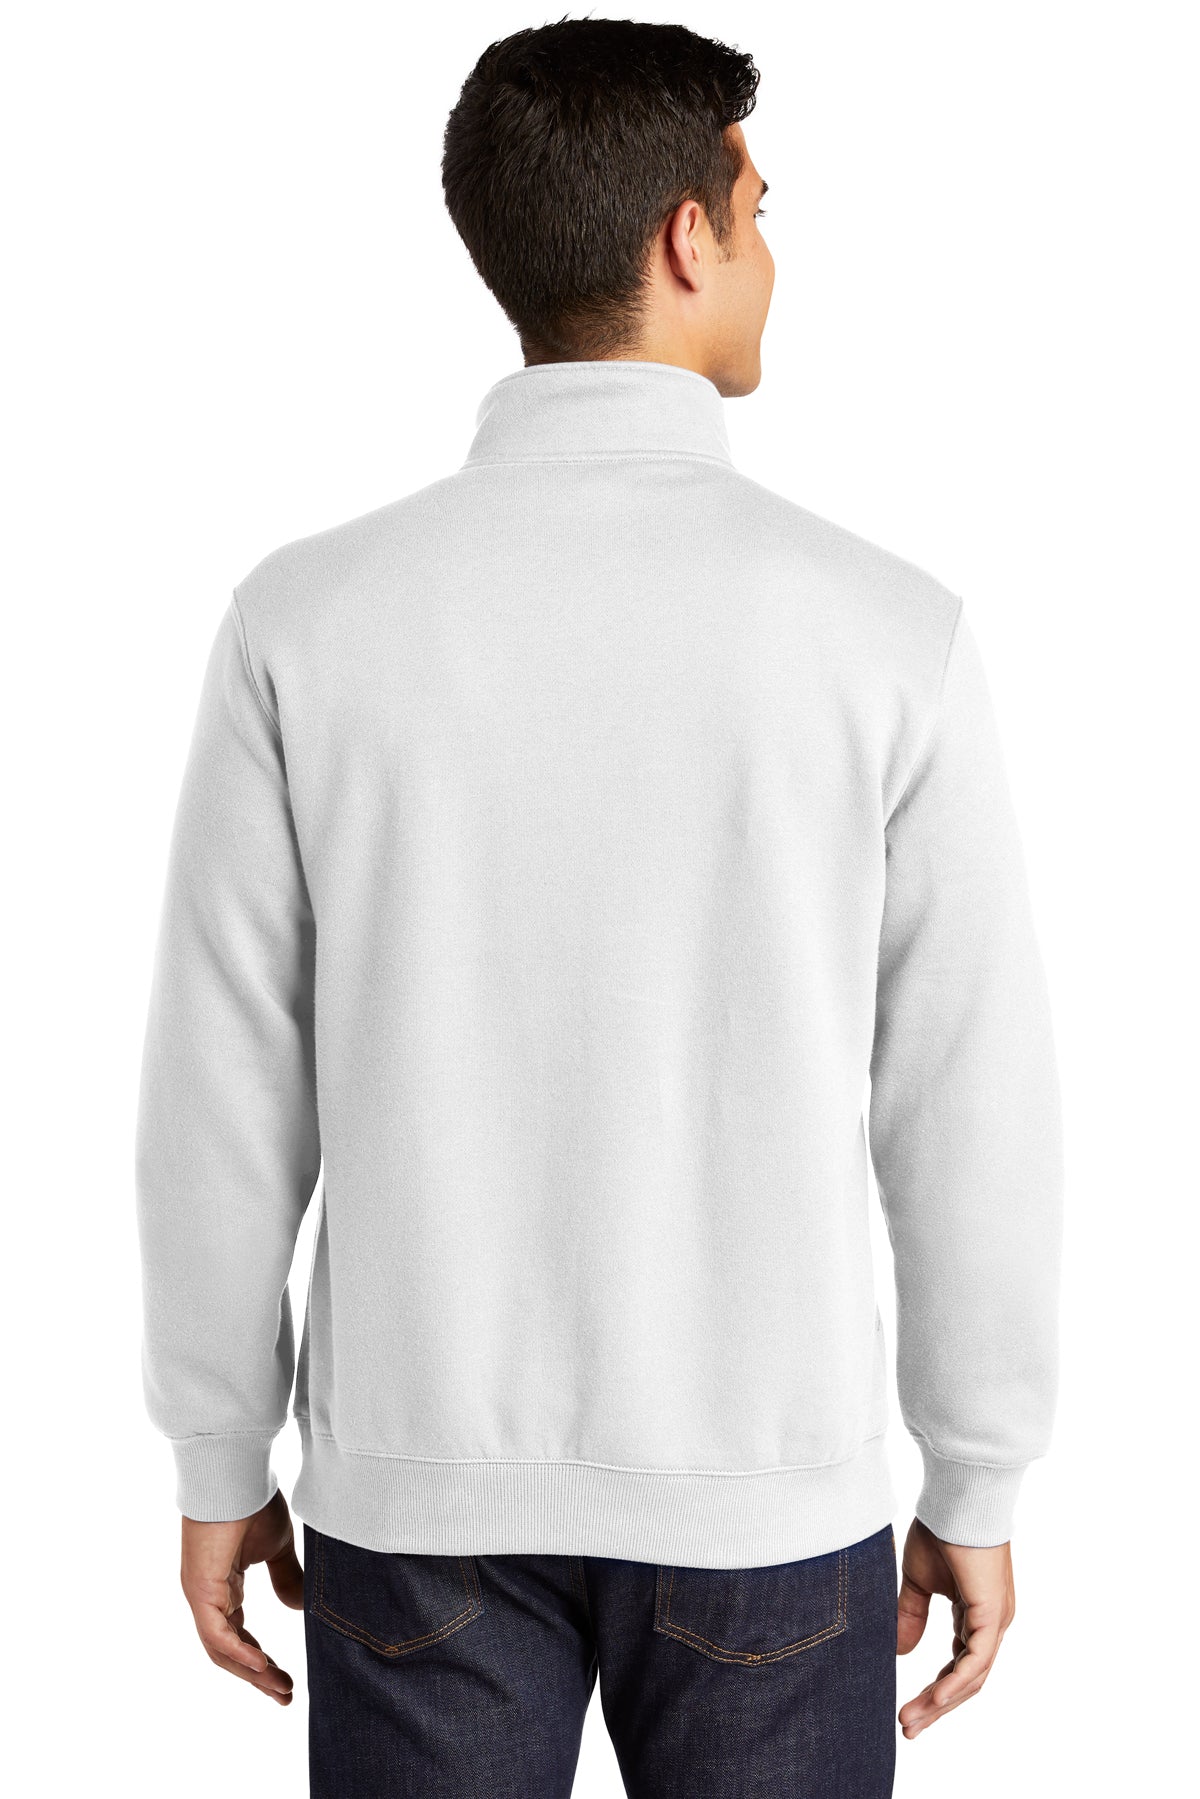 sport-tek_st253 _white_company_logo_sweatshirts